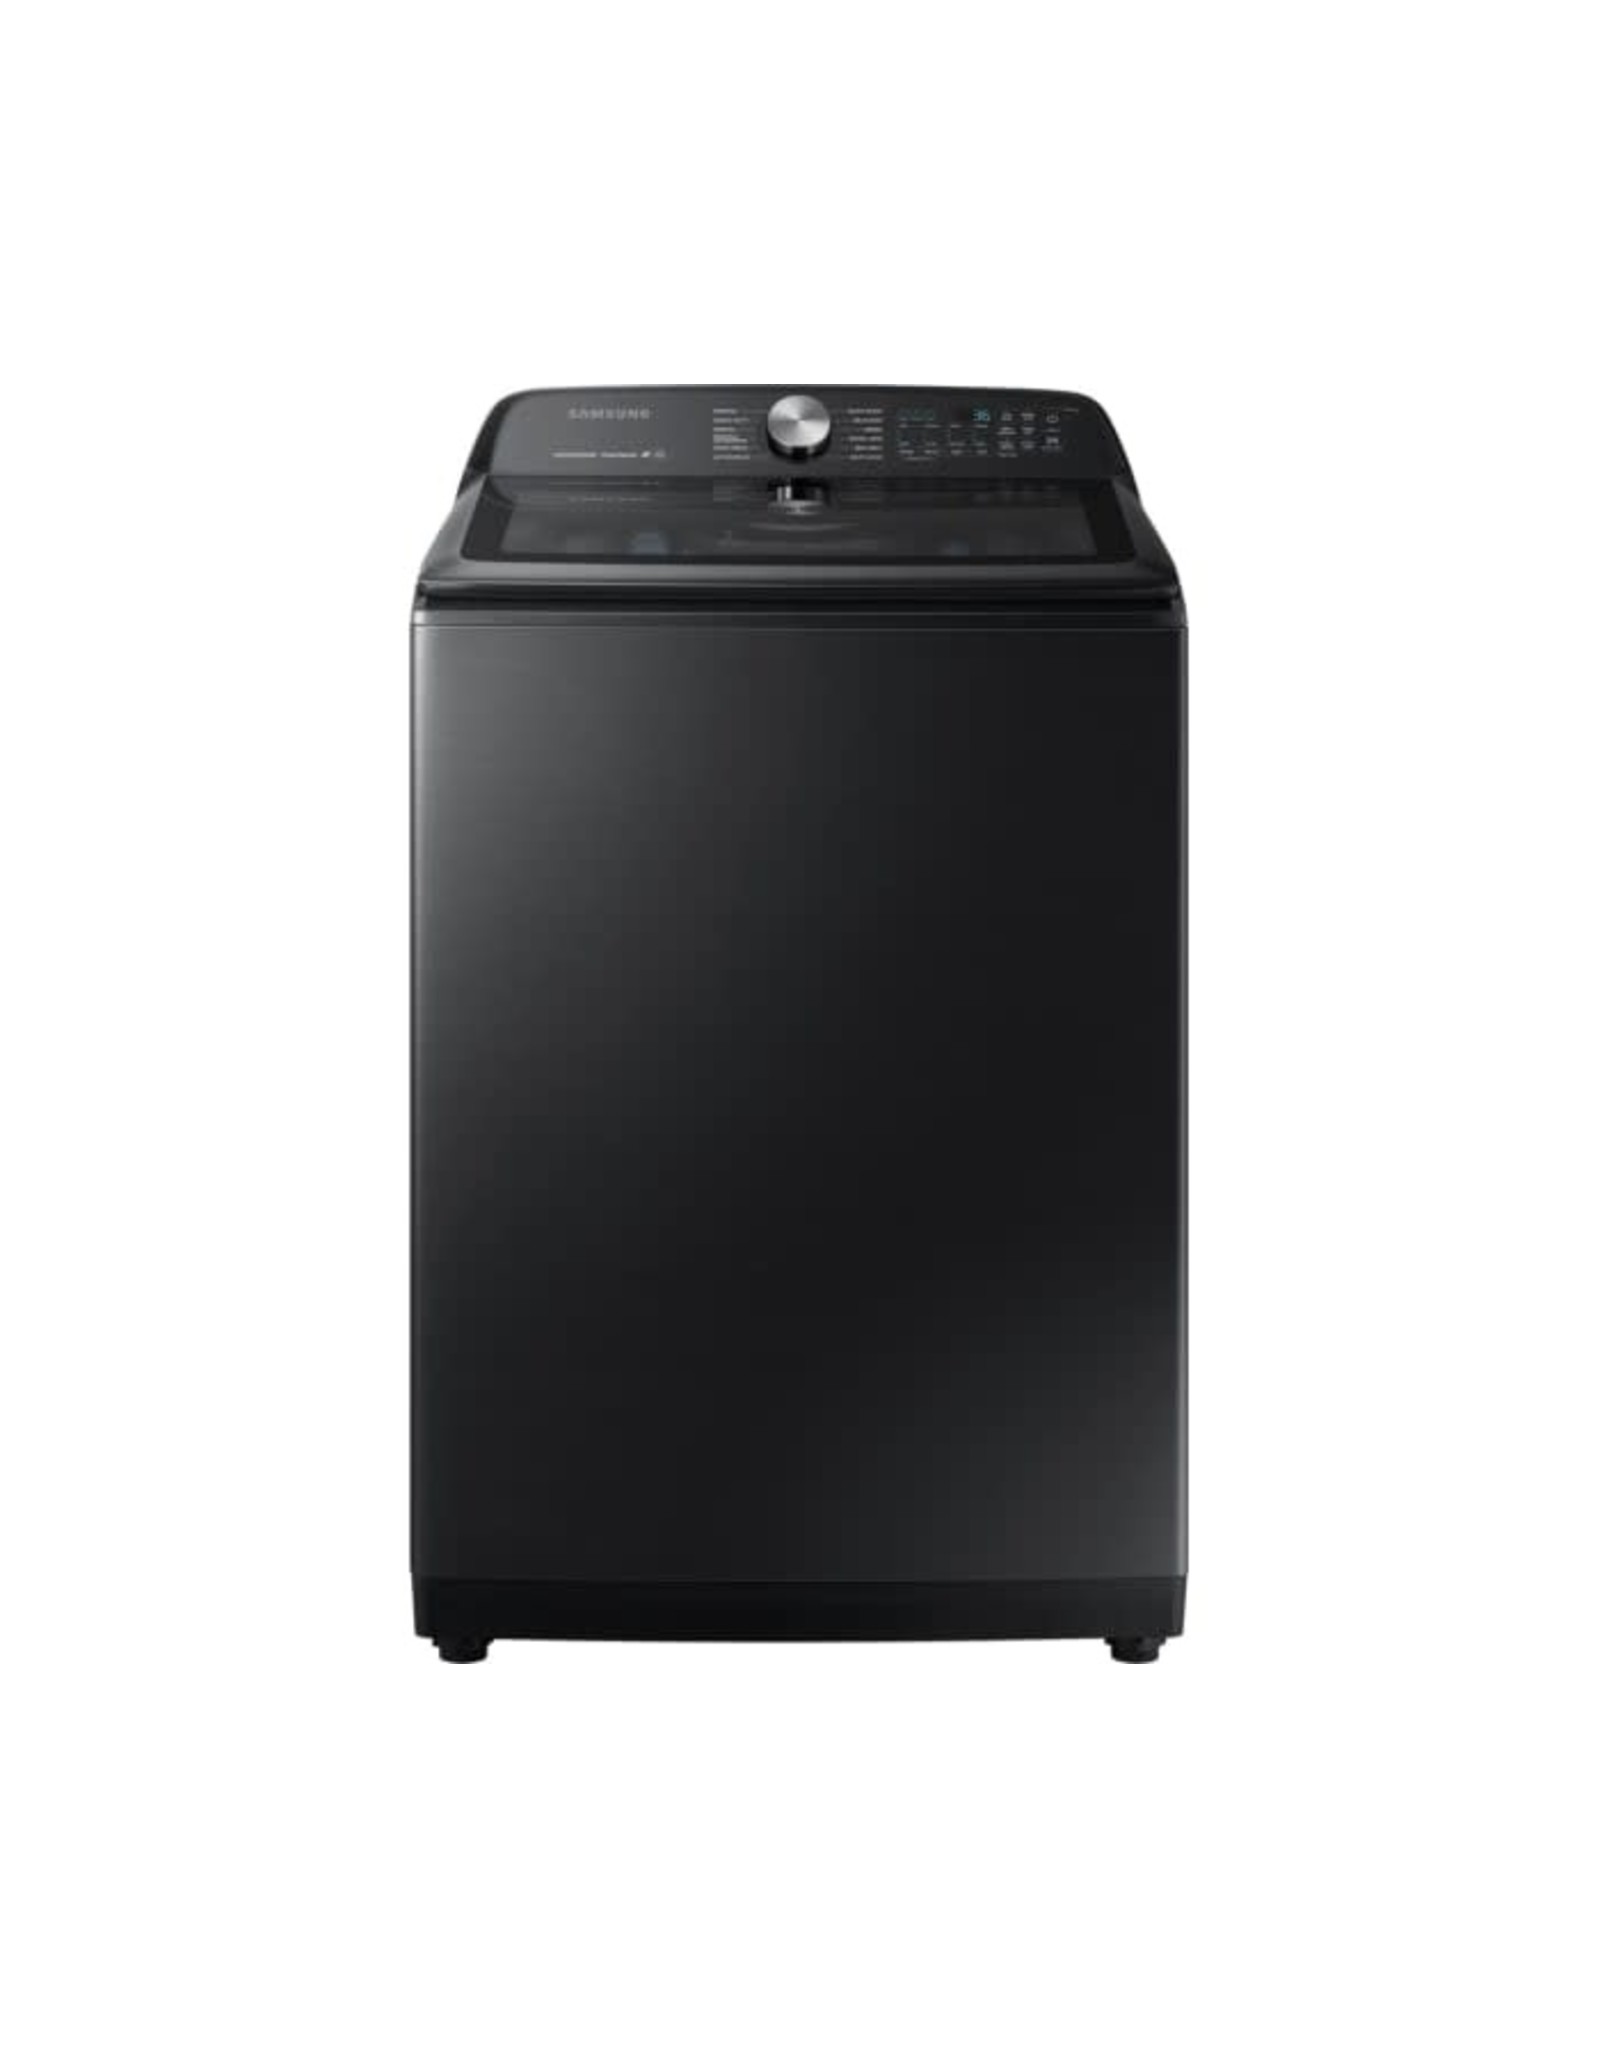 SAMSUNG WA50R5400AV 5.0 cu. ft. Hi-Efficiency Fingerprint Resistant Black Stainless Top Load Washing Machine with Super Speed, ENERGY STAR